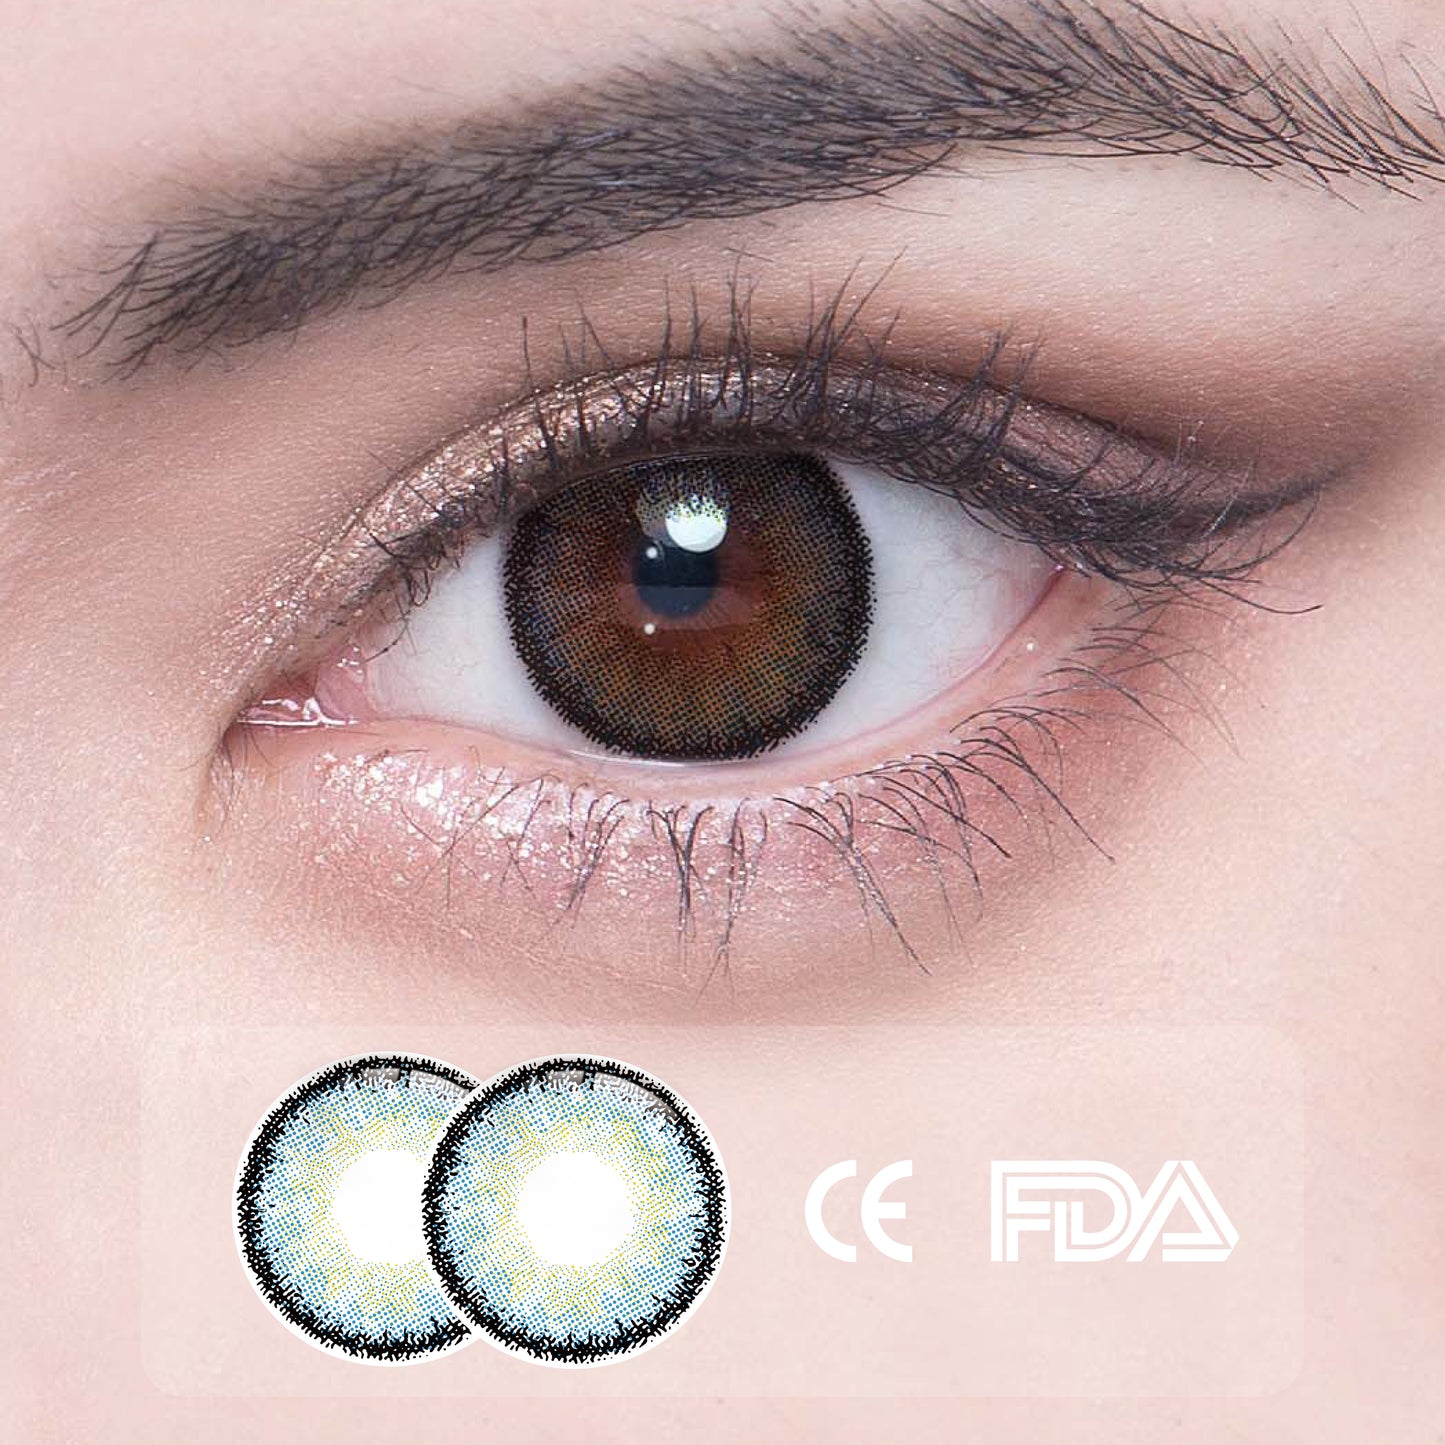 1Pcs FDA Certificate Eyes Colorful Contact Lenses - Vibrancy blue